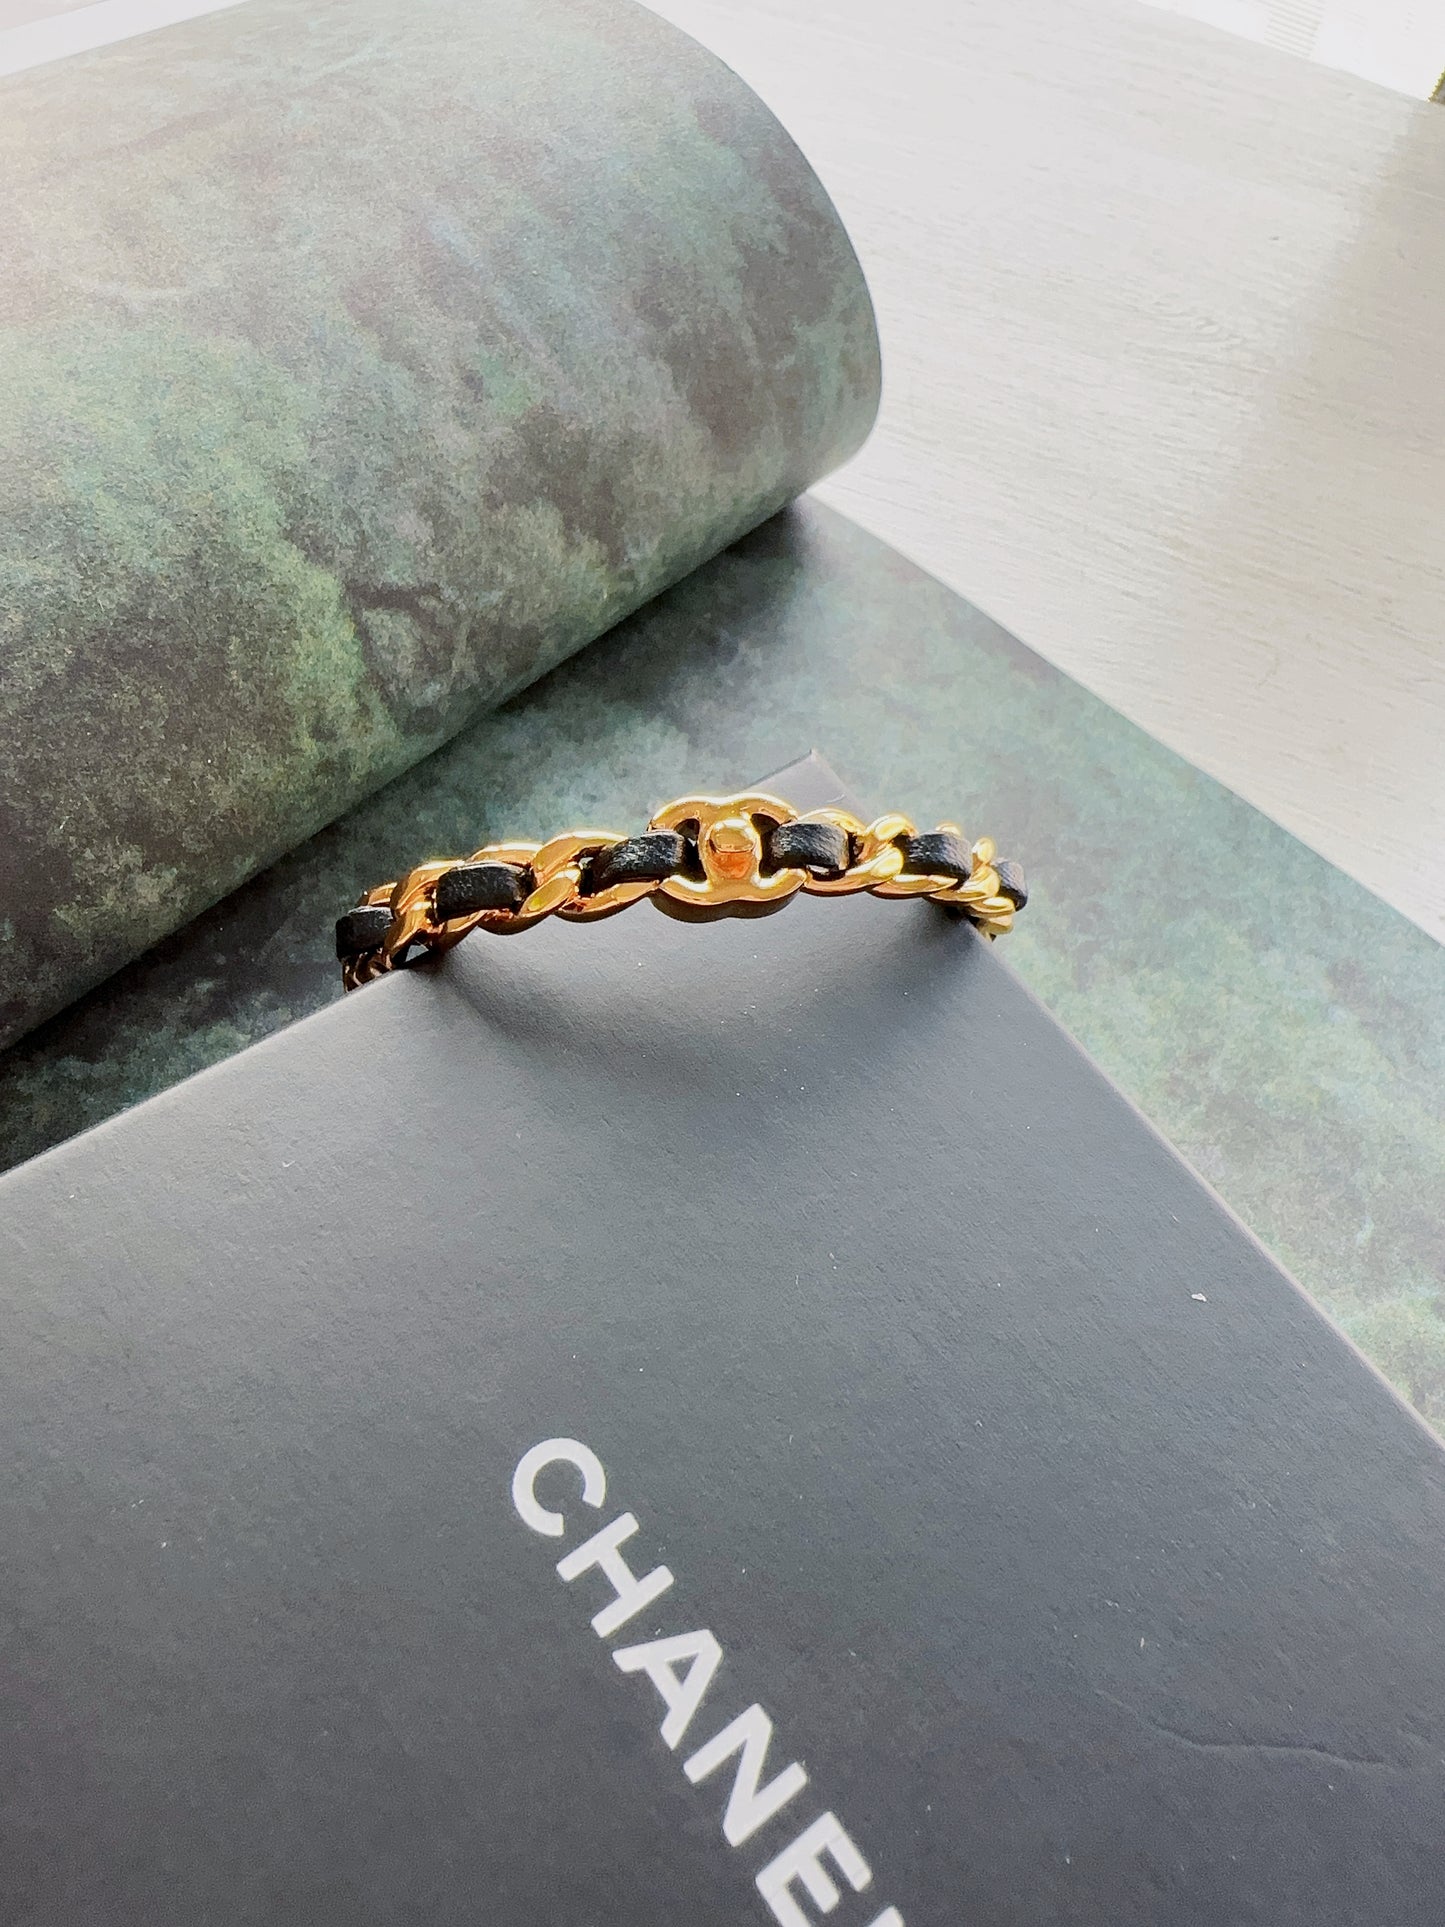 Chanel Lambskin More Is More Cuff Bracelet Black Gold